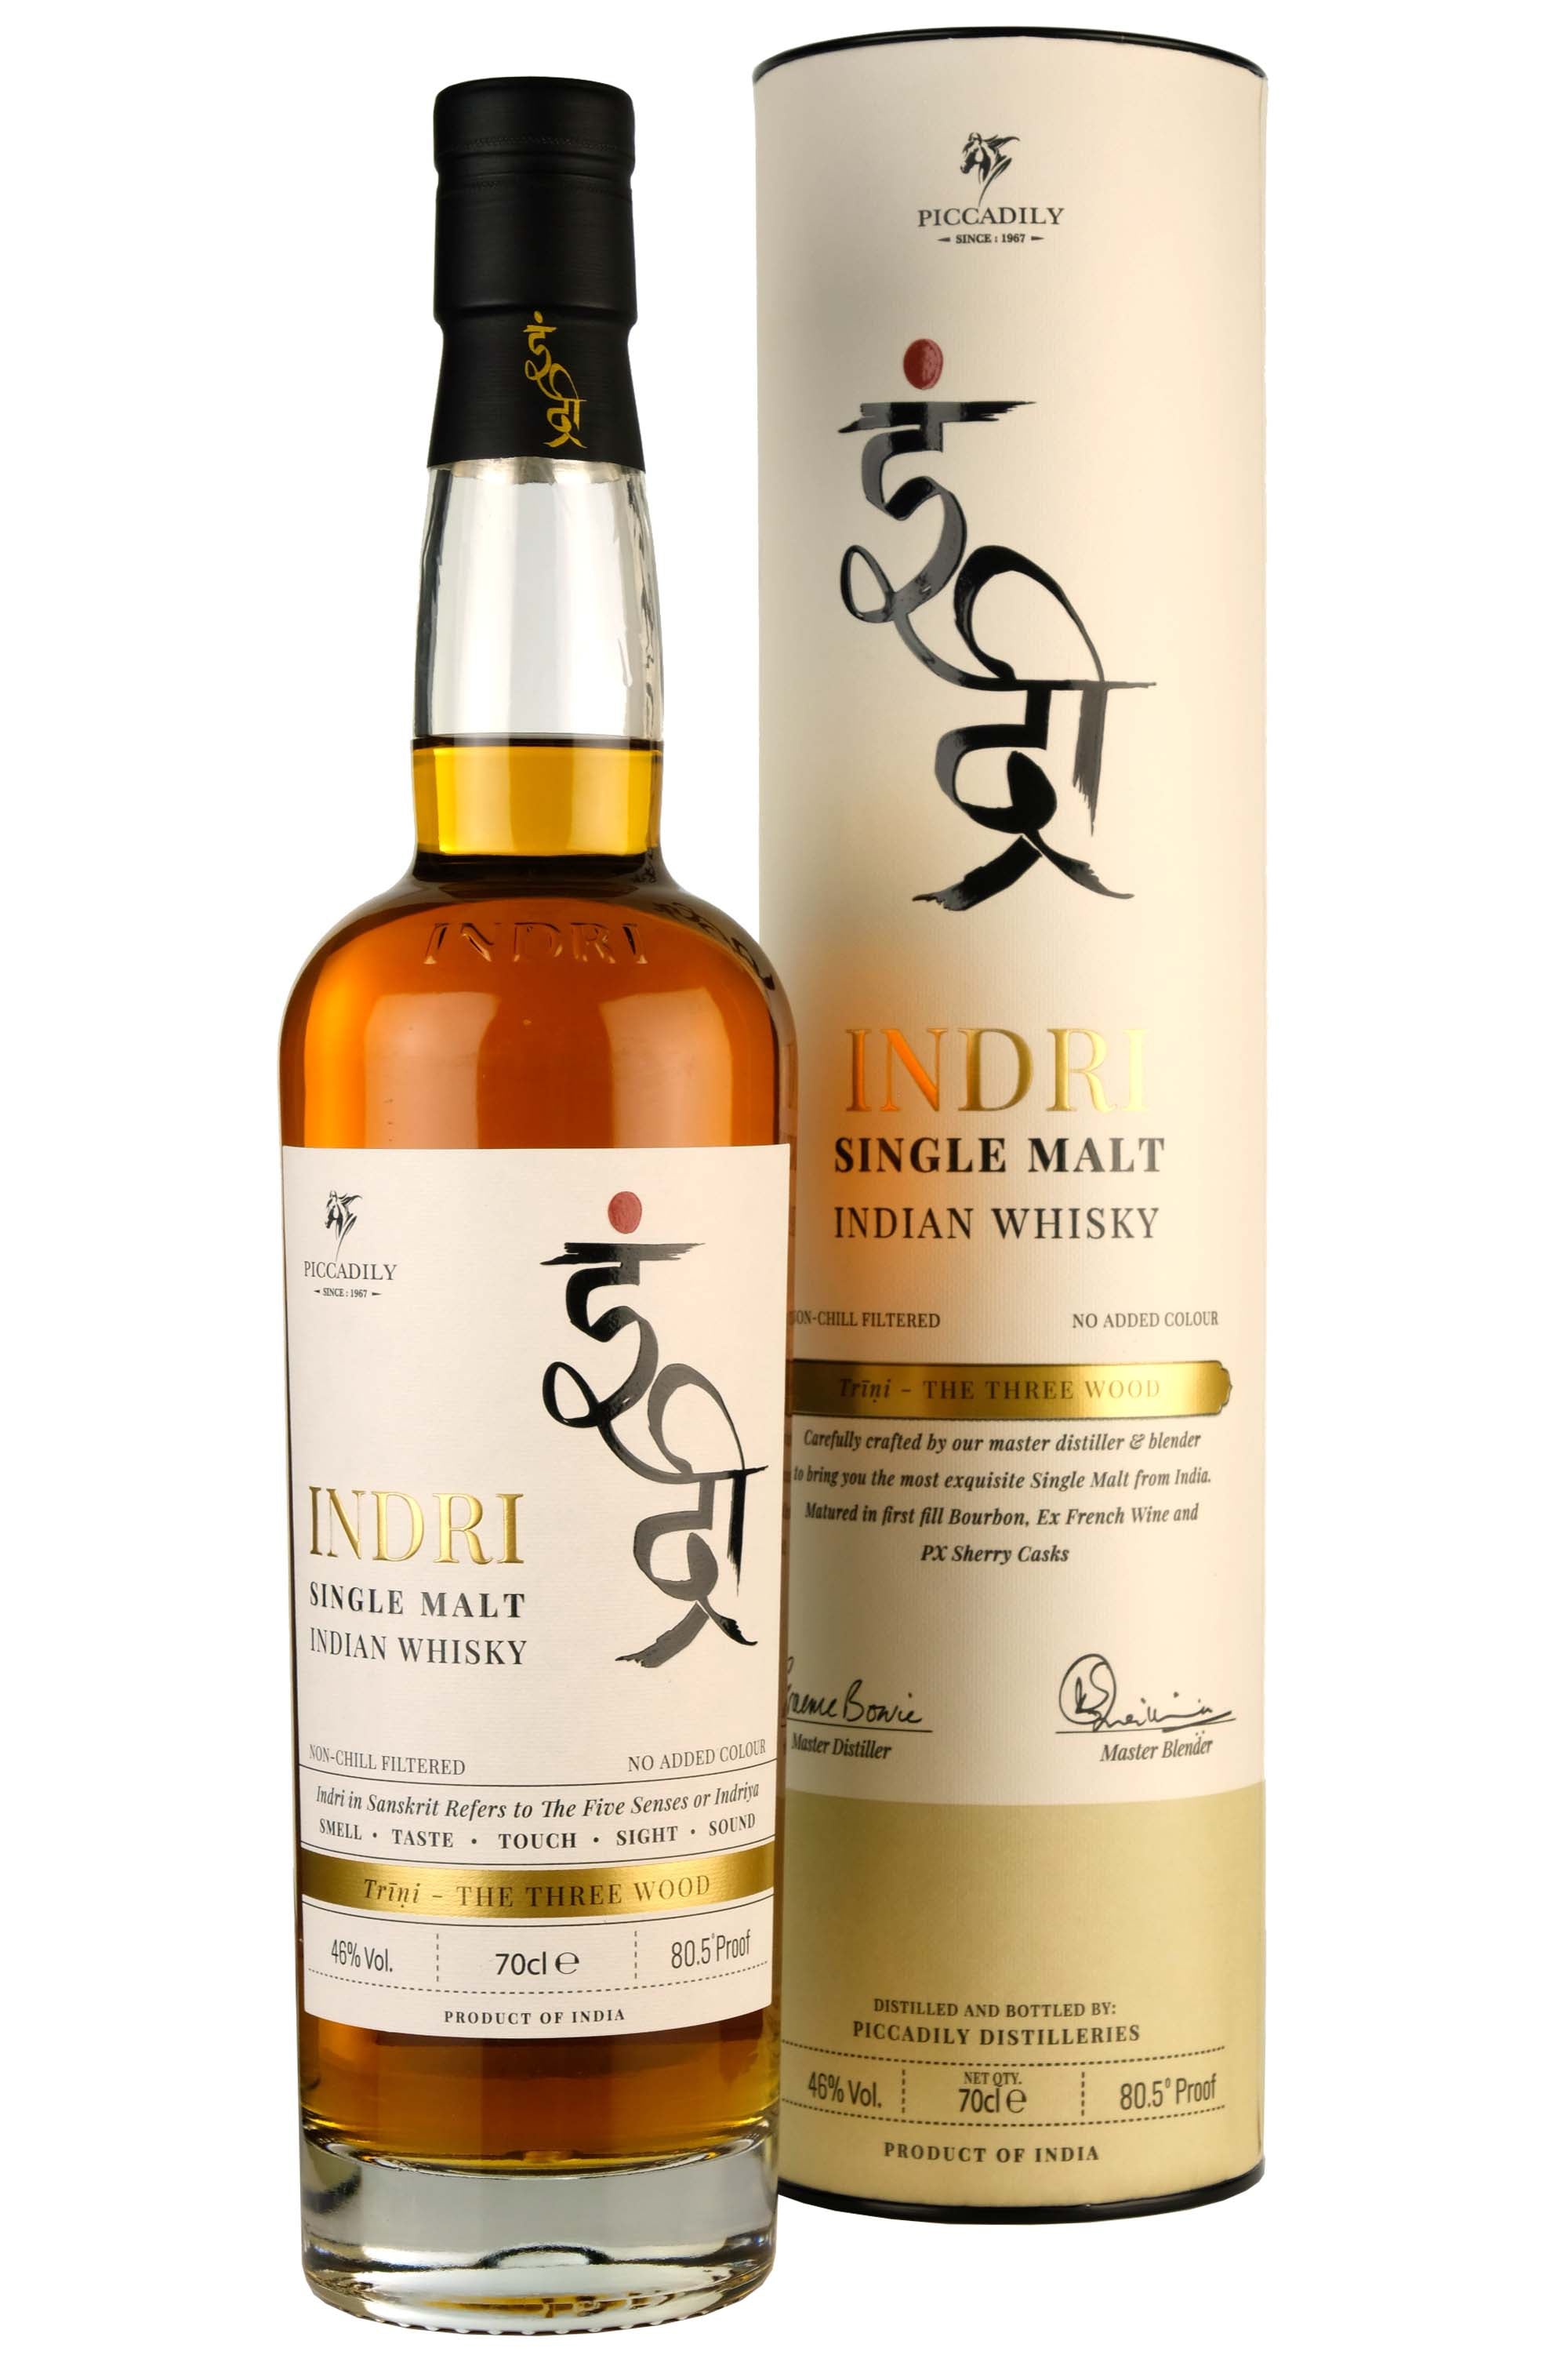 Indri Trini (The Three Wood) | Single Malt Indian Whisky